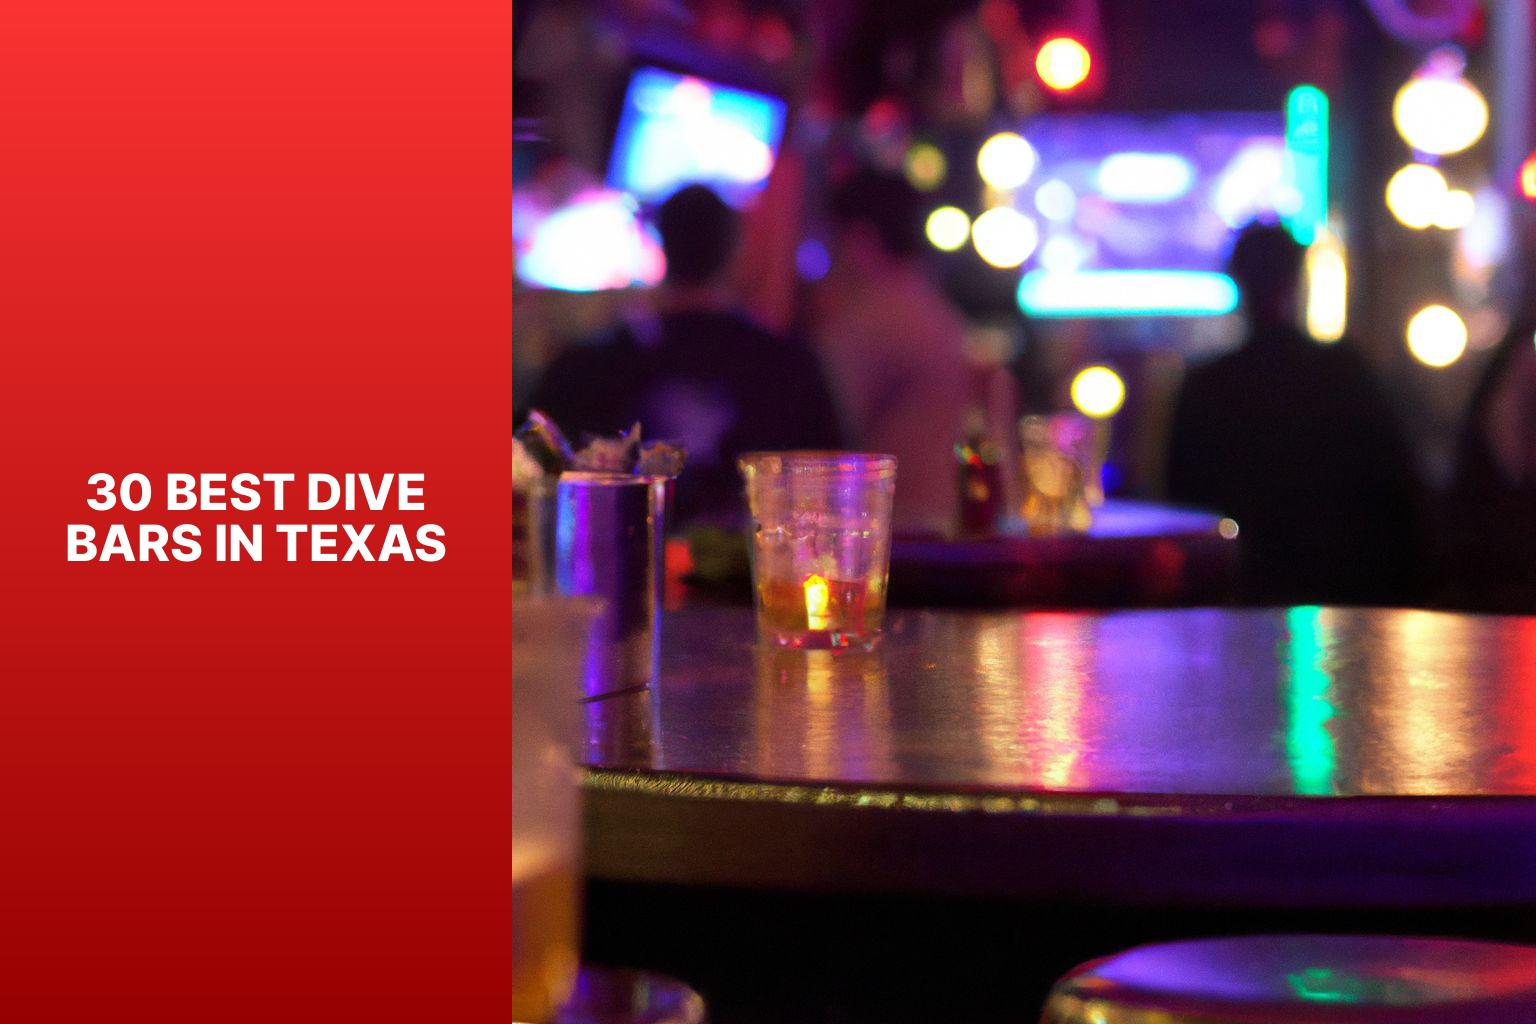 30 Best dive bars in Texas